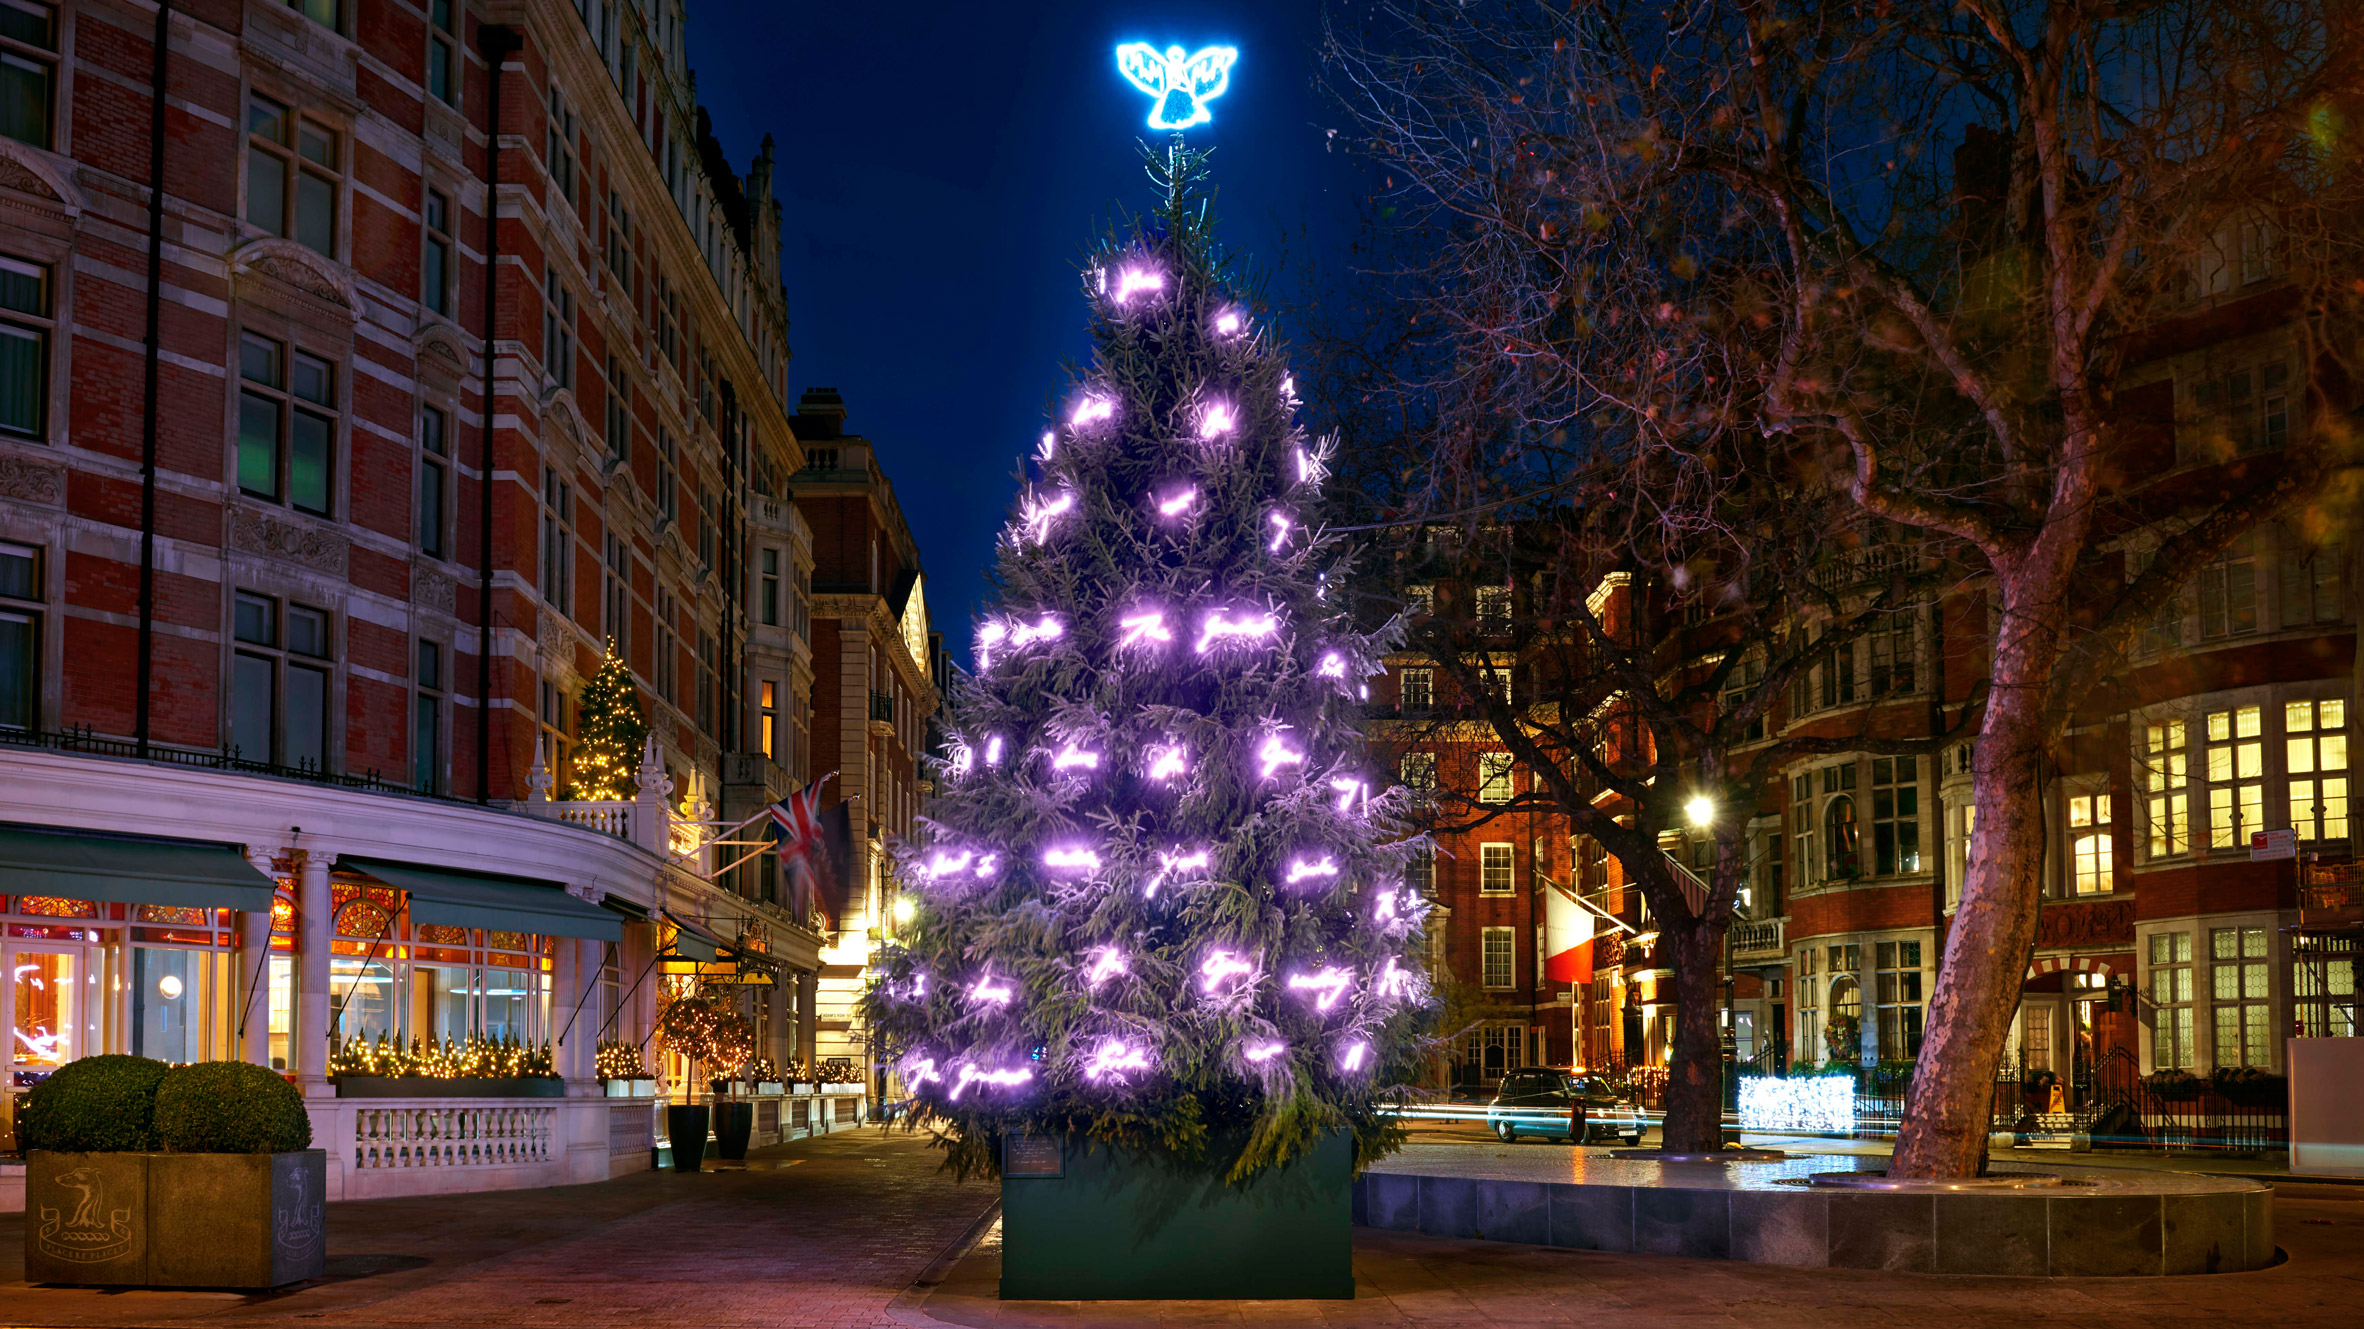 Louis Vuitton Christmas Tree Decorations 2018